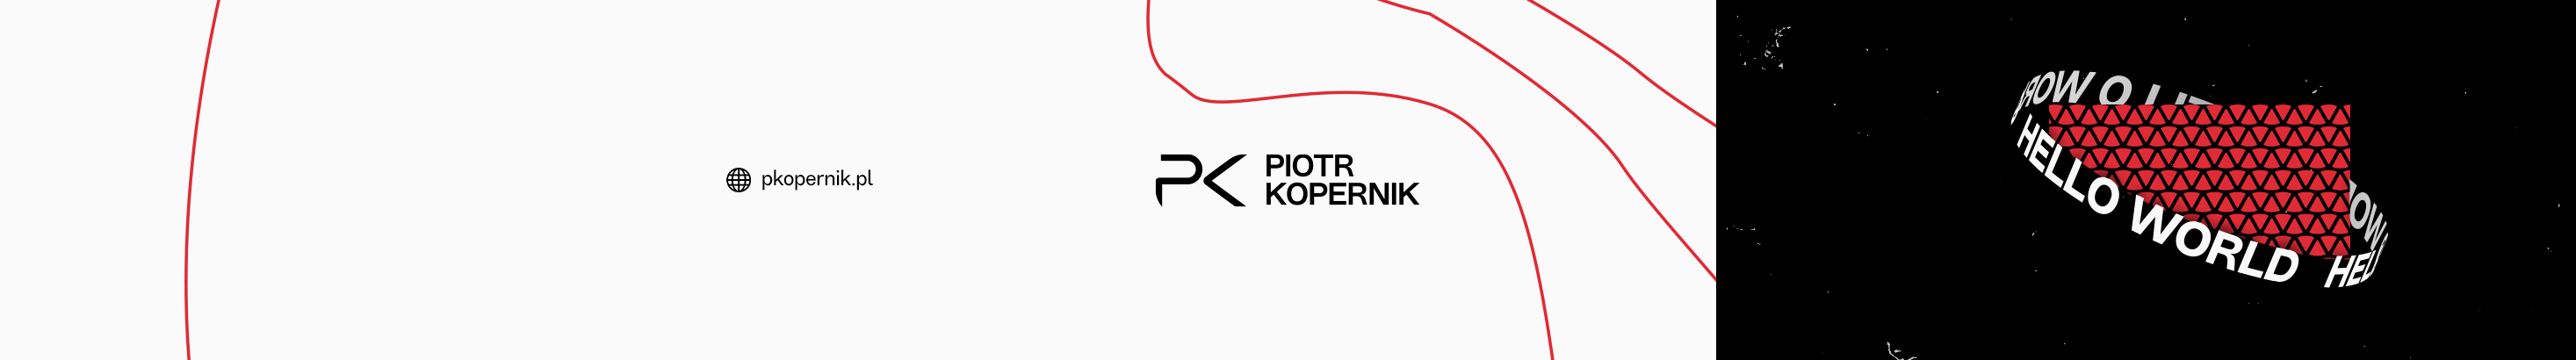 Piotr Kopernik's profile banner